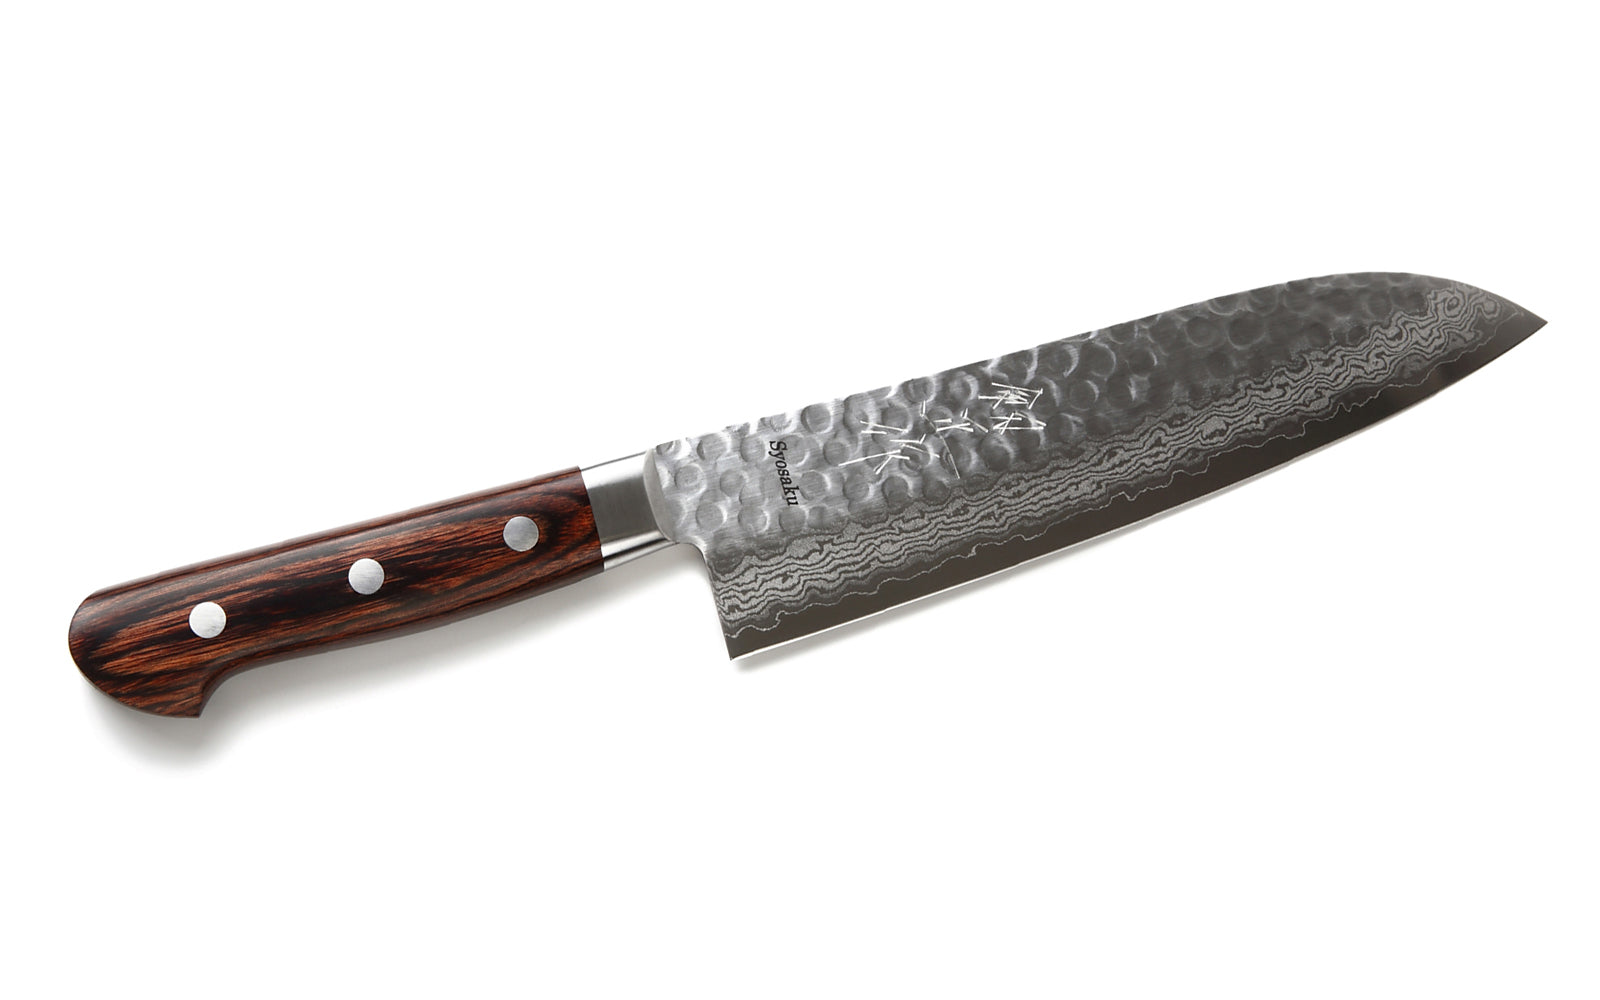 Santoku knife uses